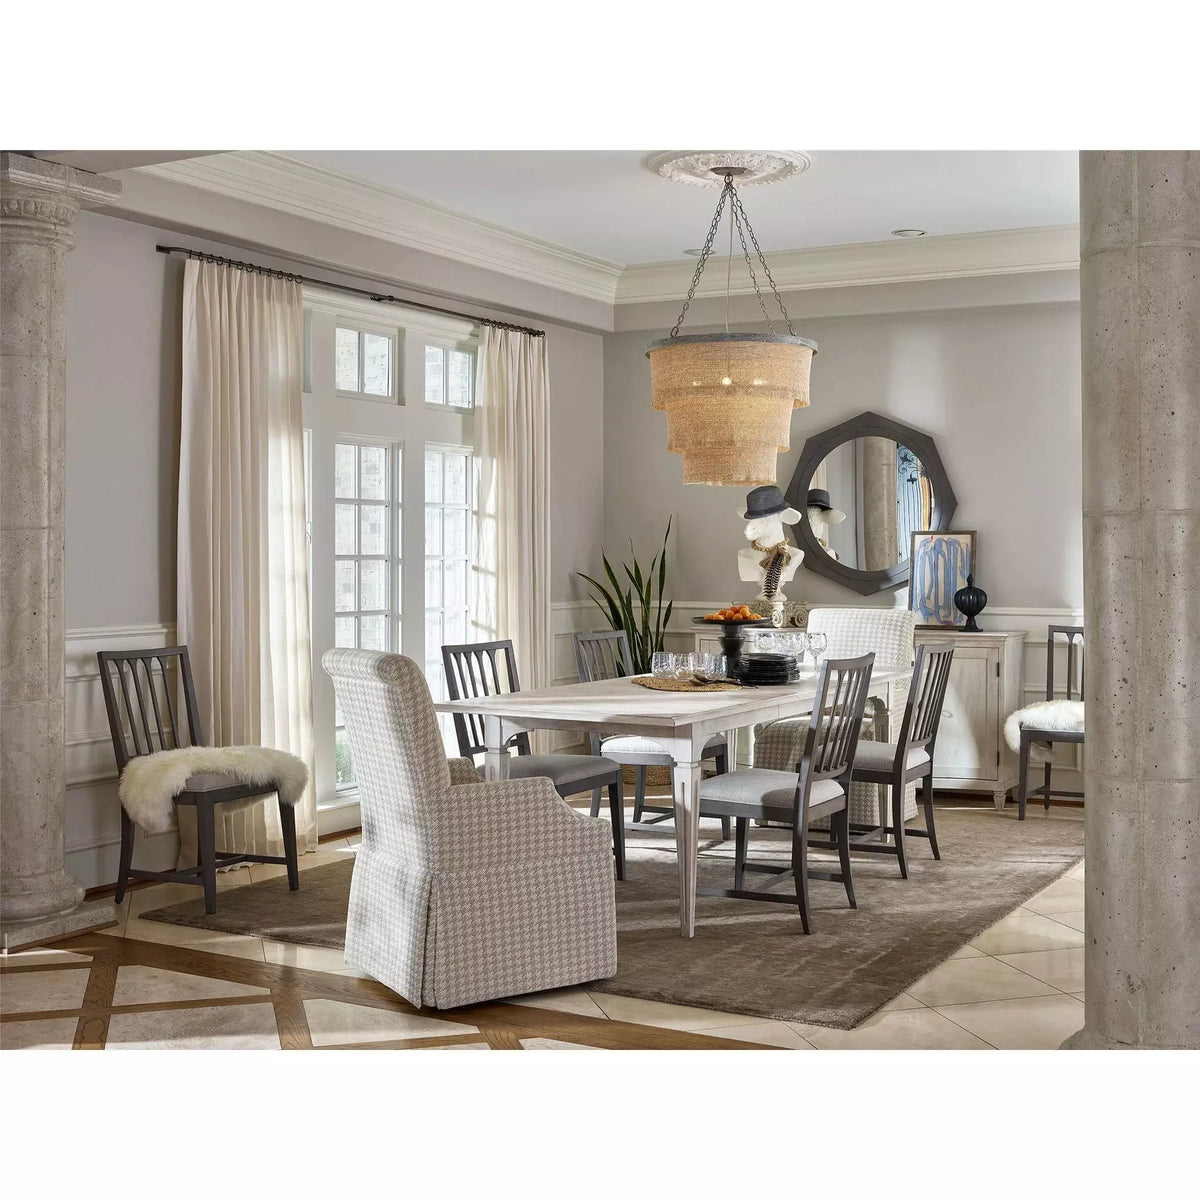 Rectangular Dining Table - Be Bold Furniture